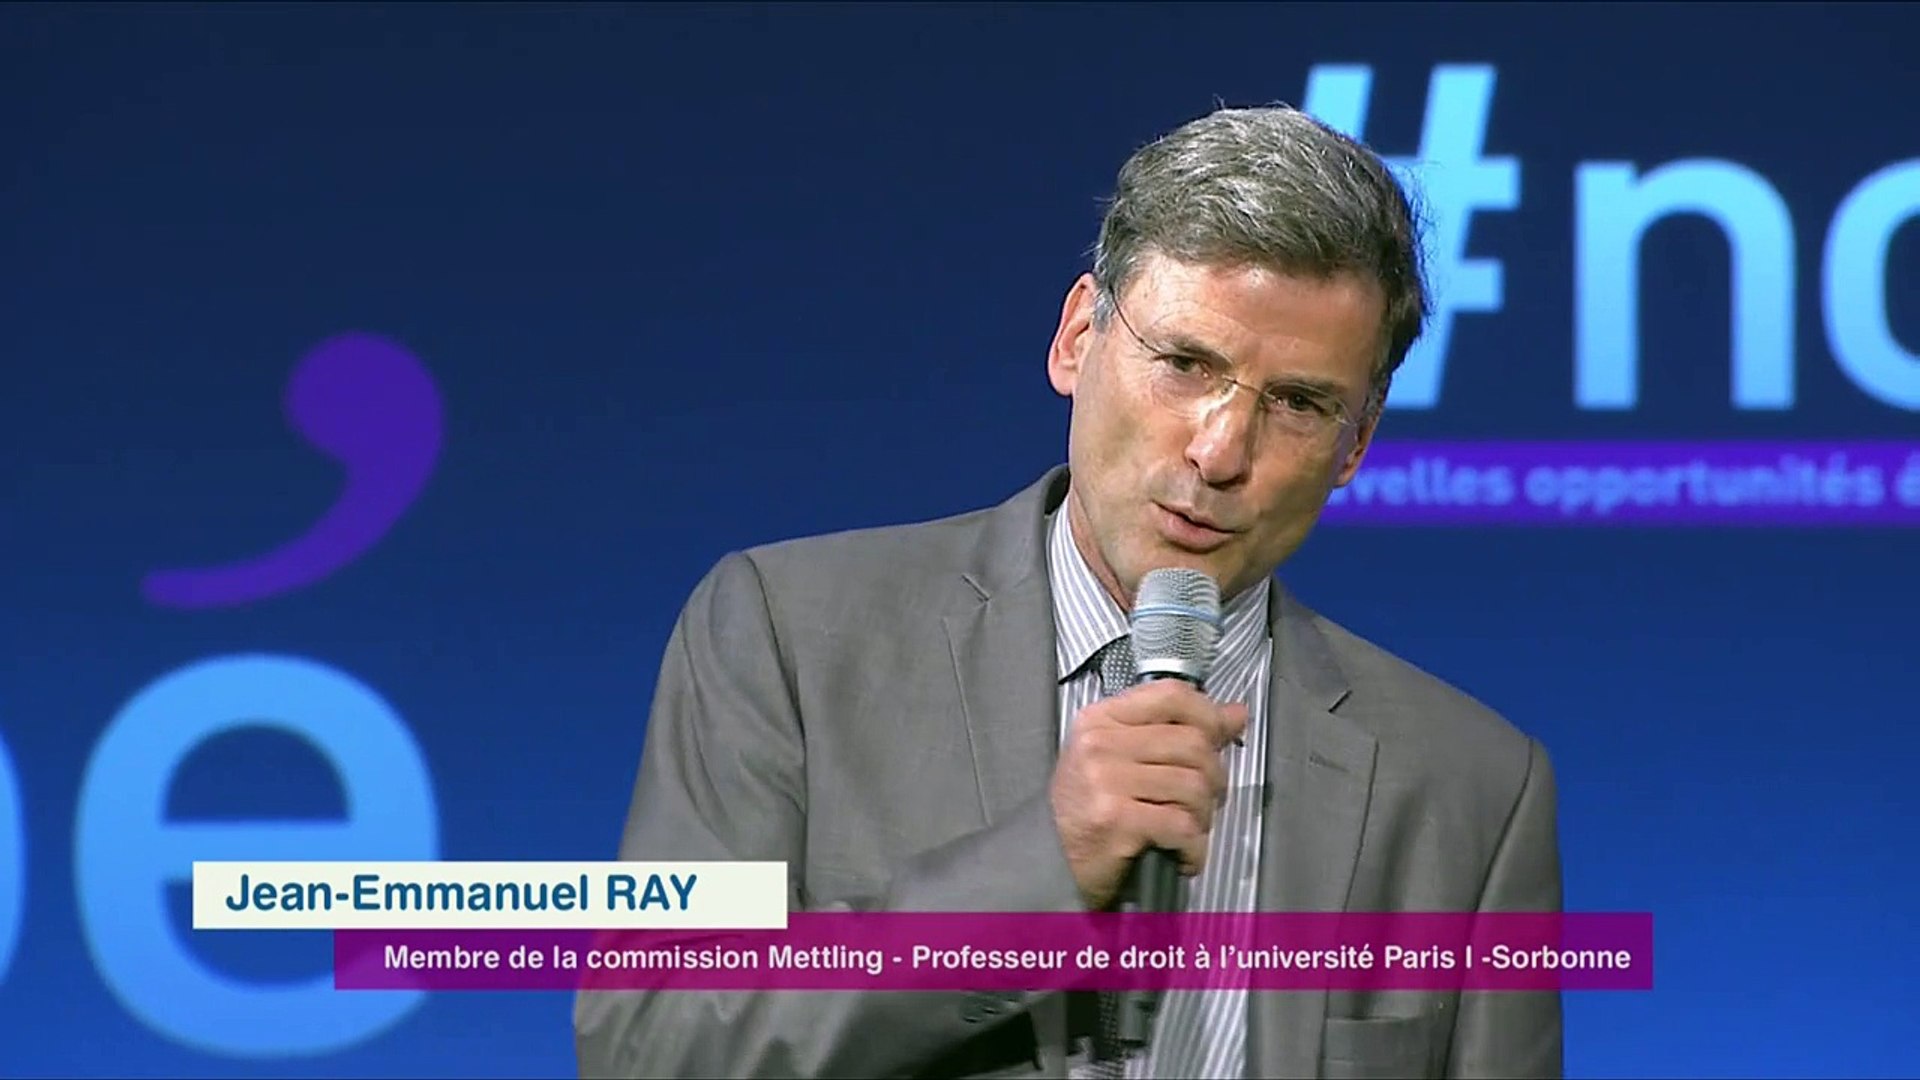 Archive - Jean-Emmanuel Ray #noé, novembre 2015 - Vidéo Dailymotion